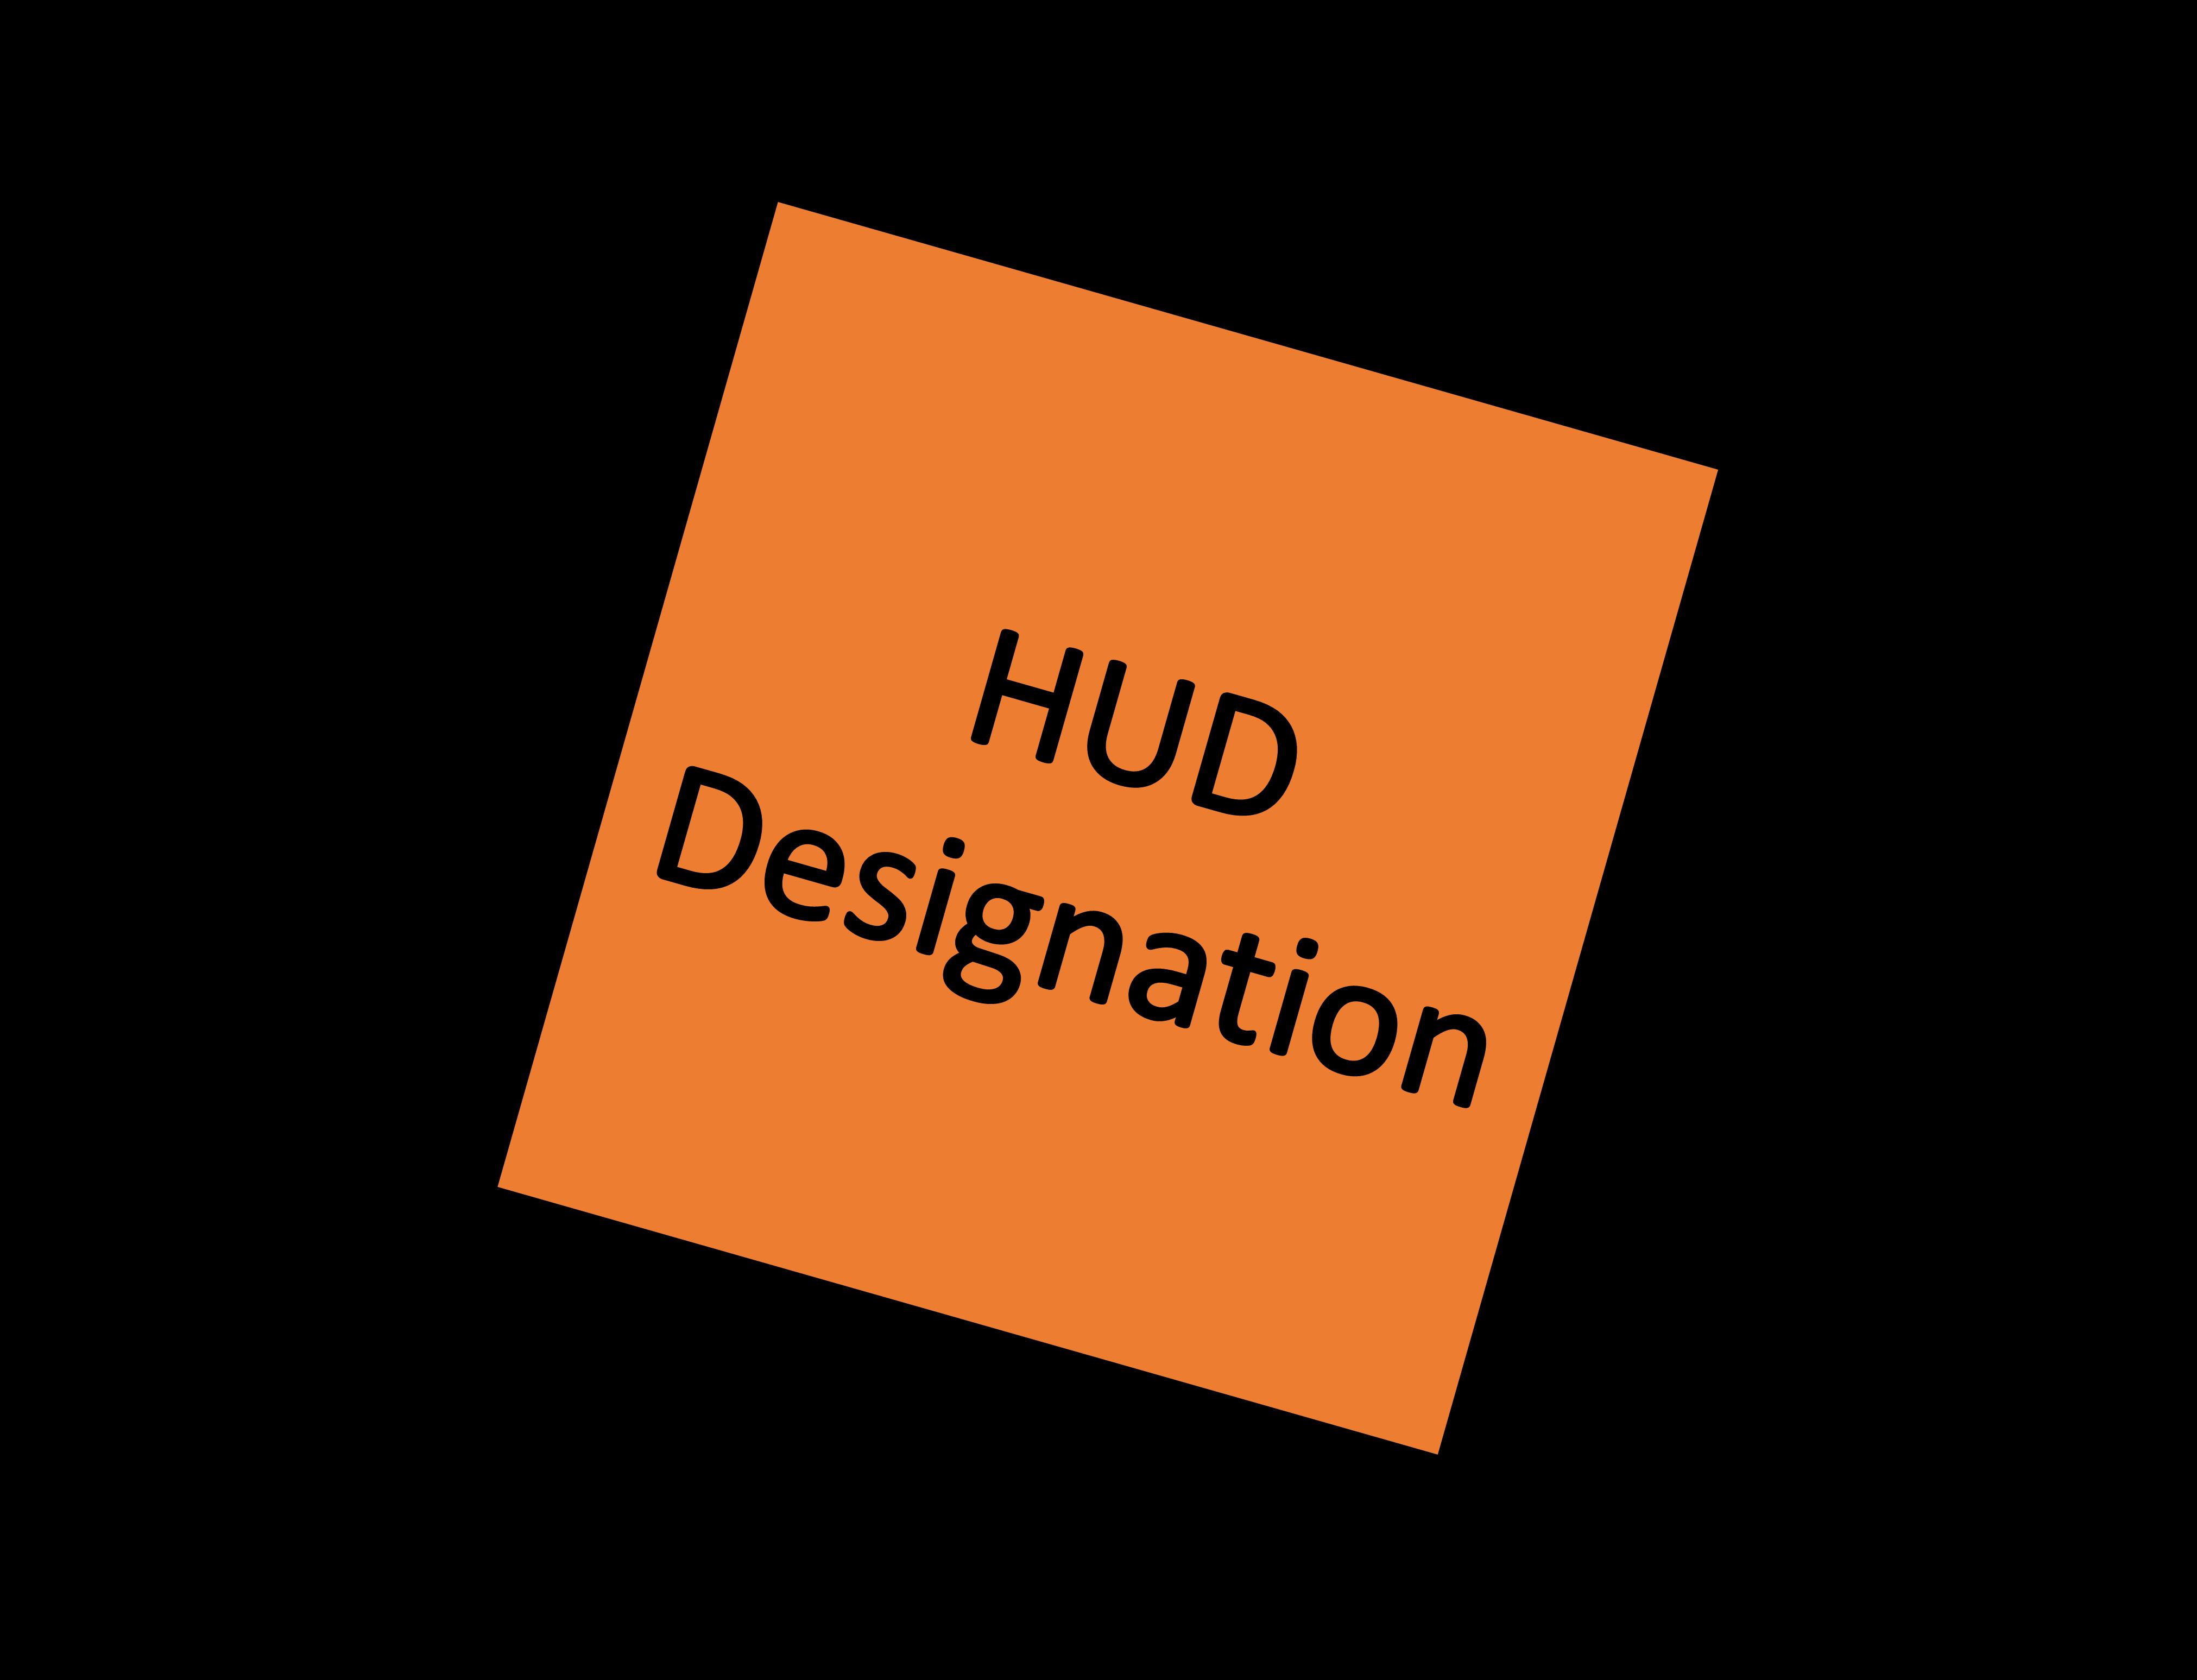 HUD Designation - Medical Device Academy